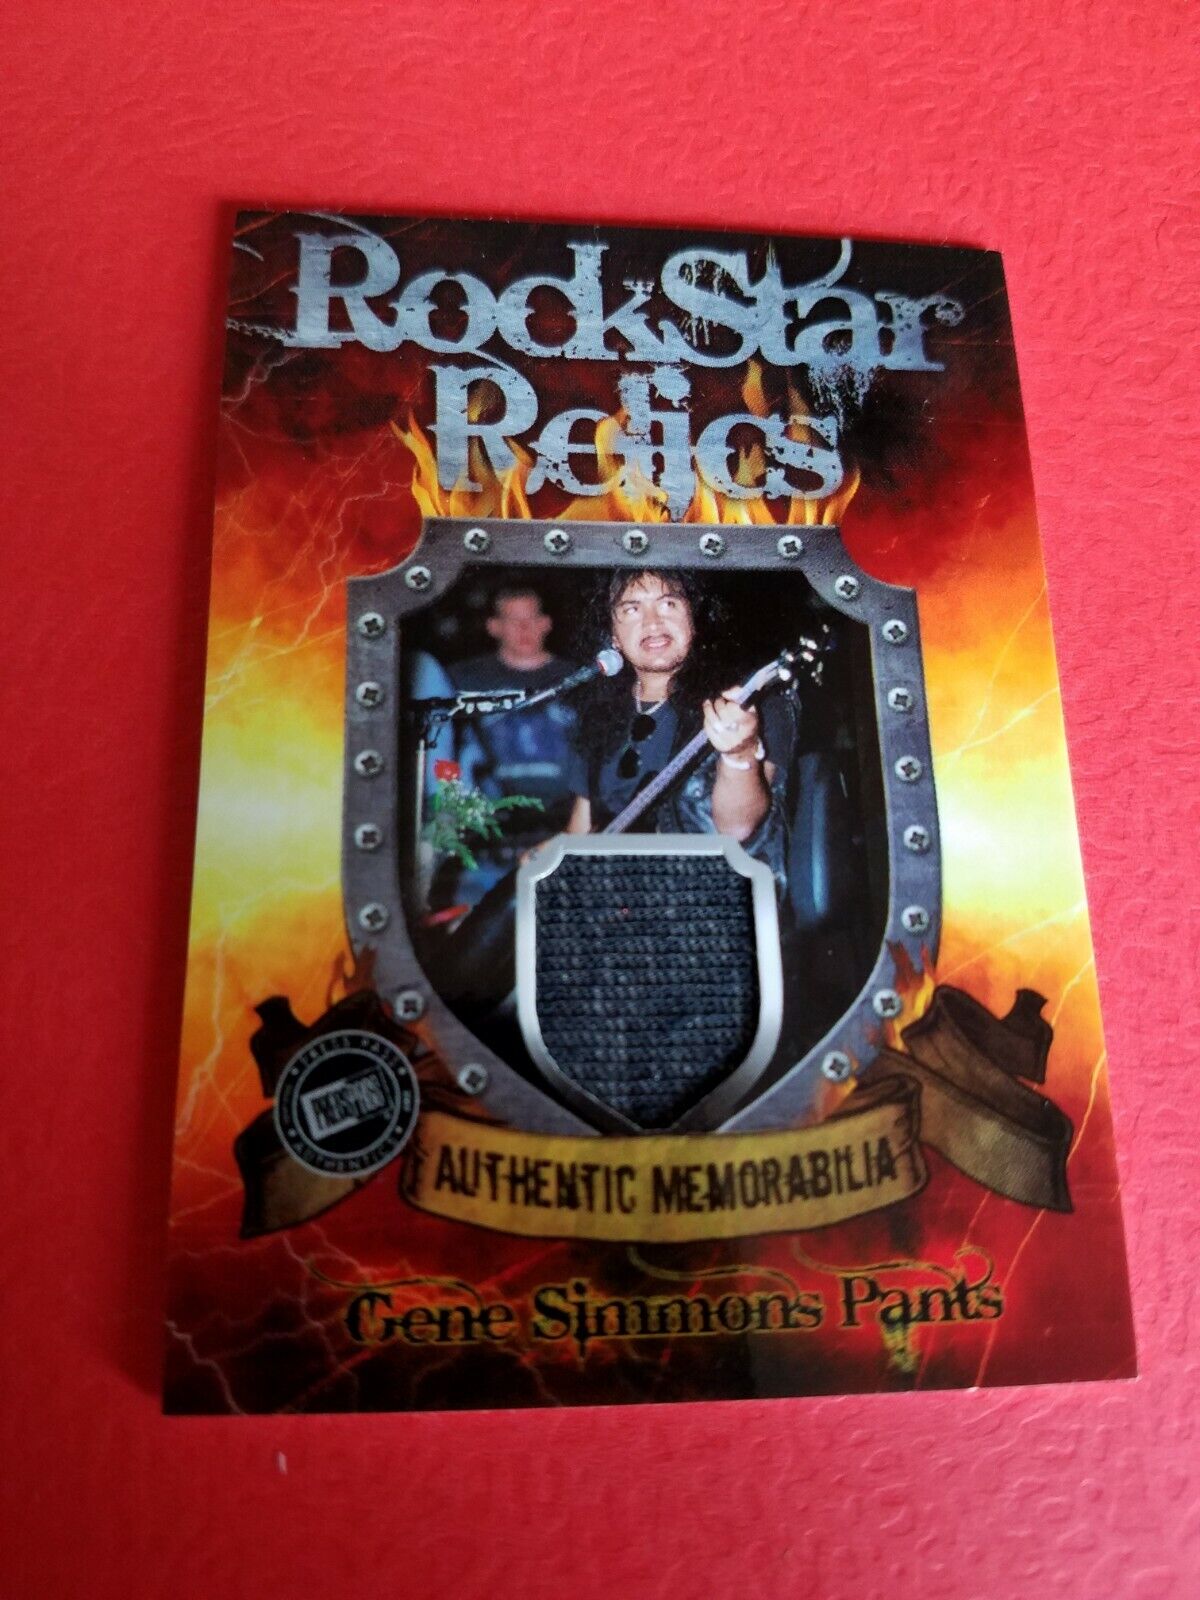 KISS KLOTHES GENE SIMMONS WORN PANTS SWATCH ROCK STAR RELIC CARD 2009 PRESS PASS